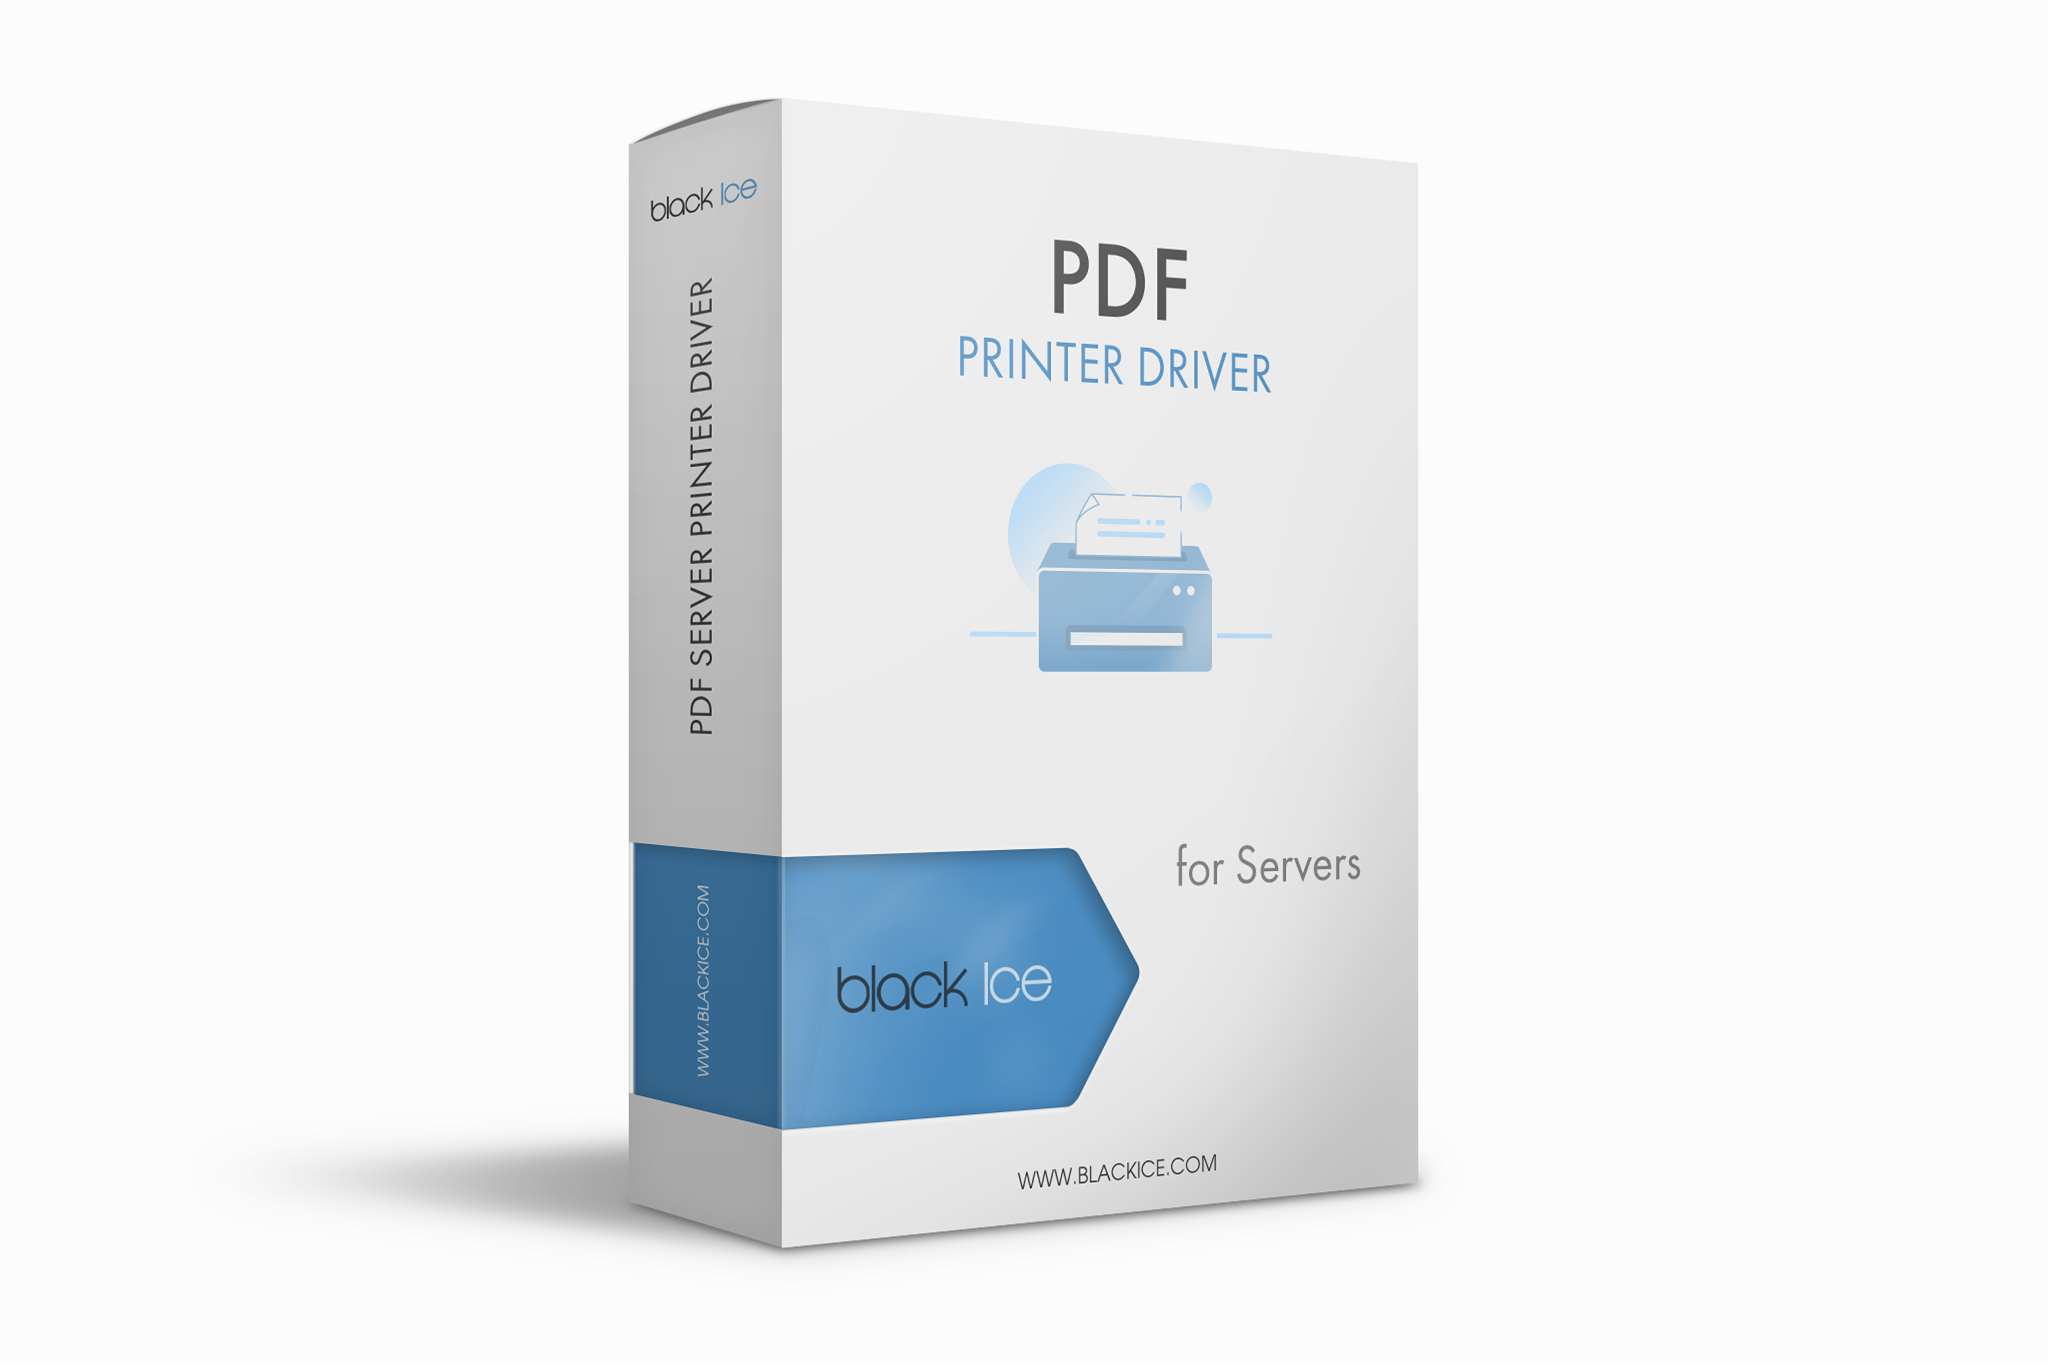 PDF Printer Driver Server Subscription (Single Server and 3 multi-printers or ports)